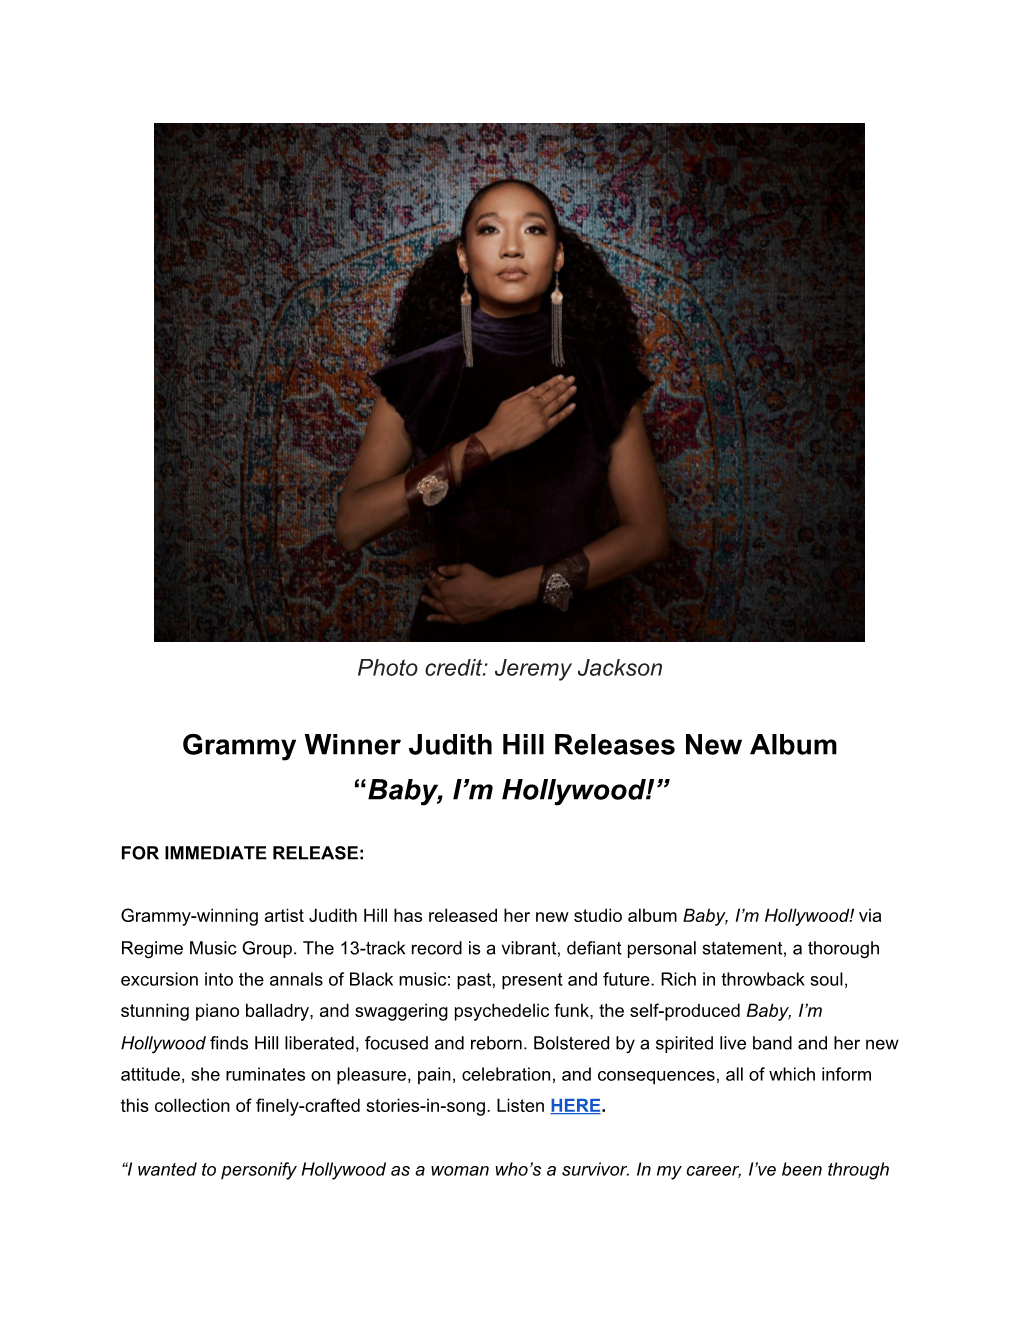 Grammy Winner Judith Hill Releases New Album “​Baby, I'm Hollywood!”